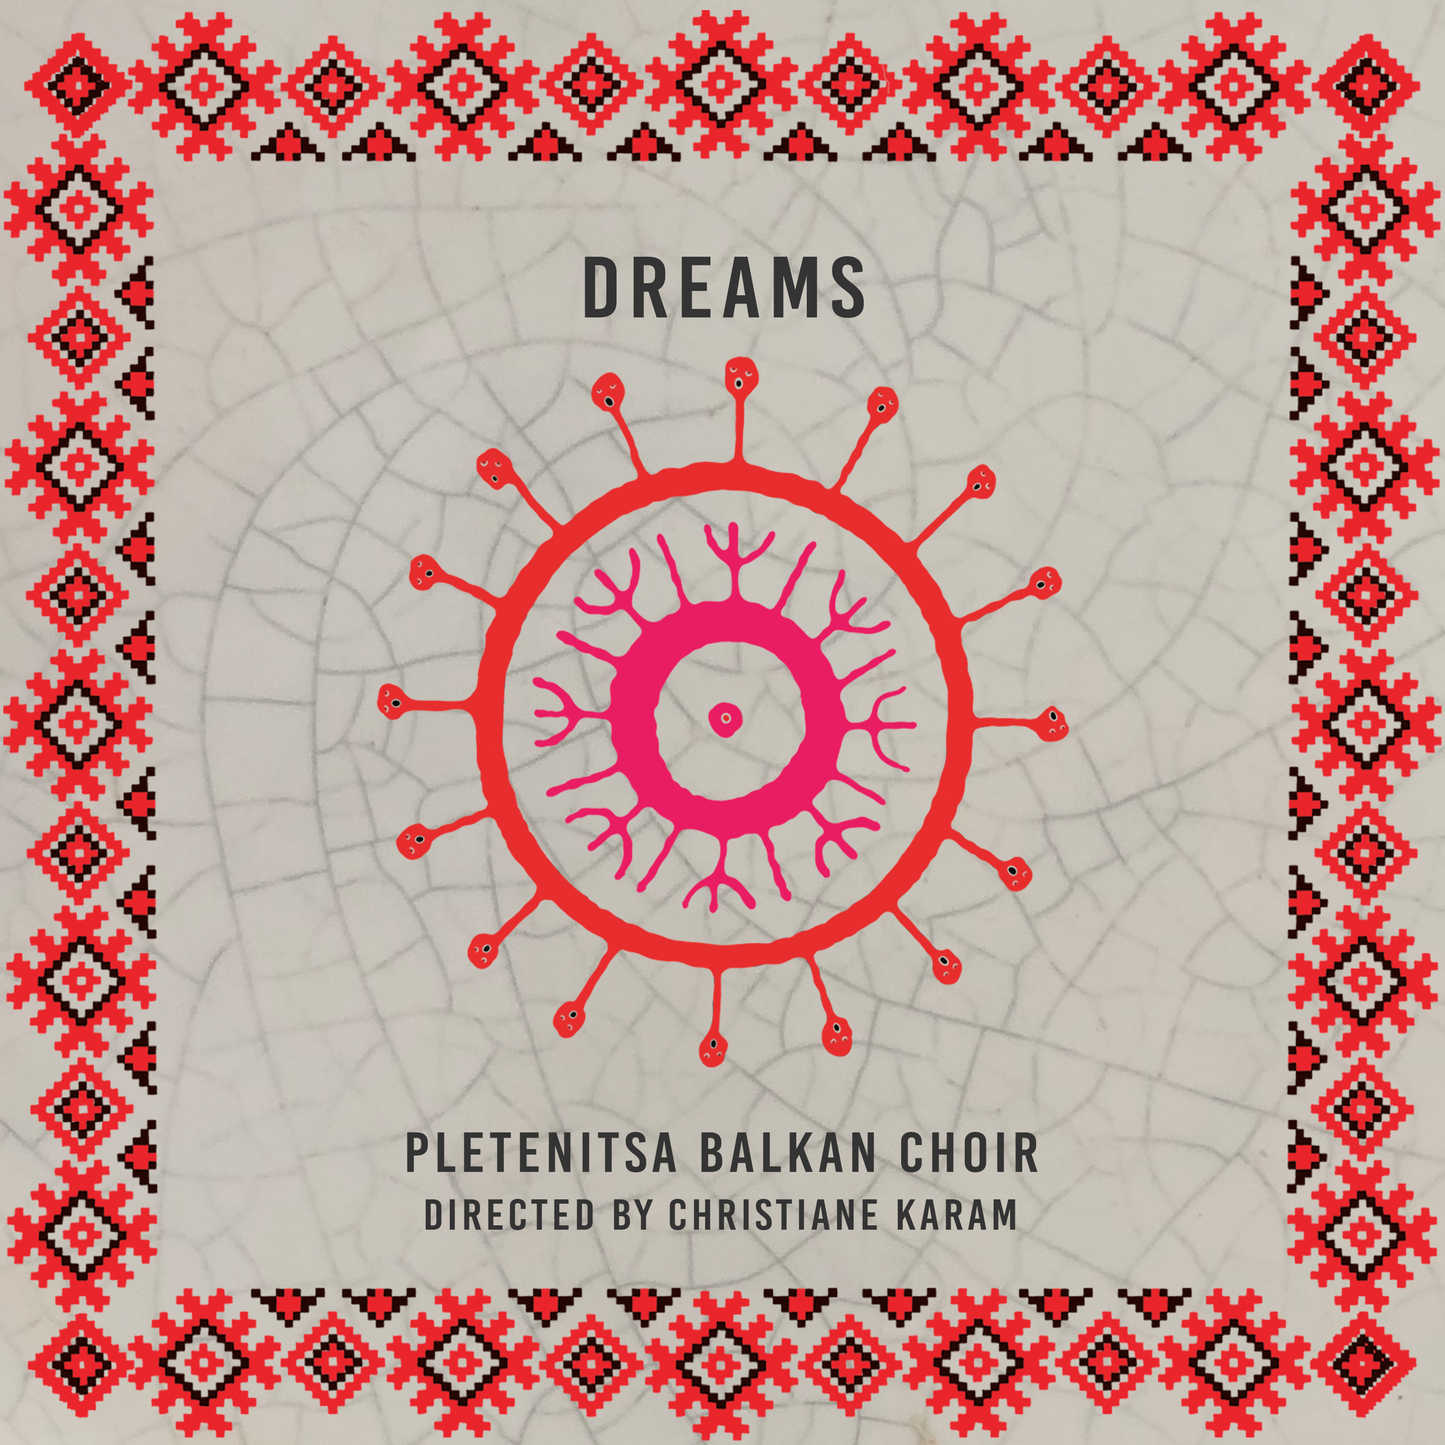 Dreams by Pletenitsa Balkan Choir